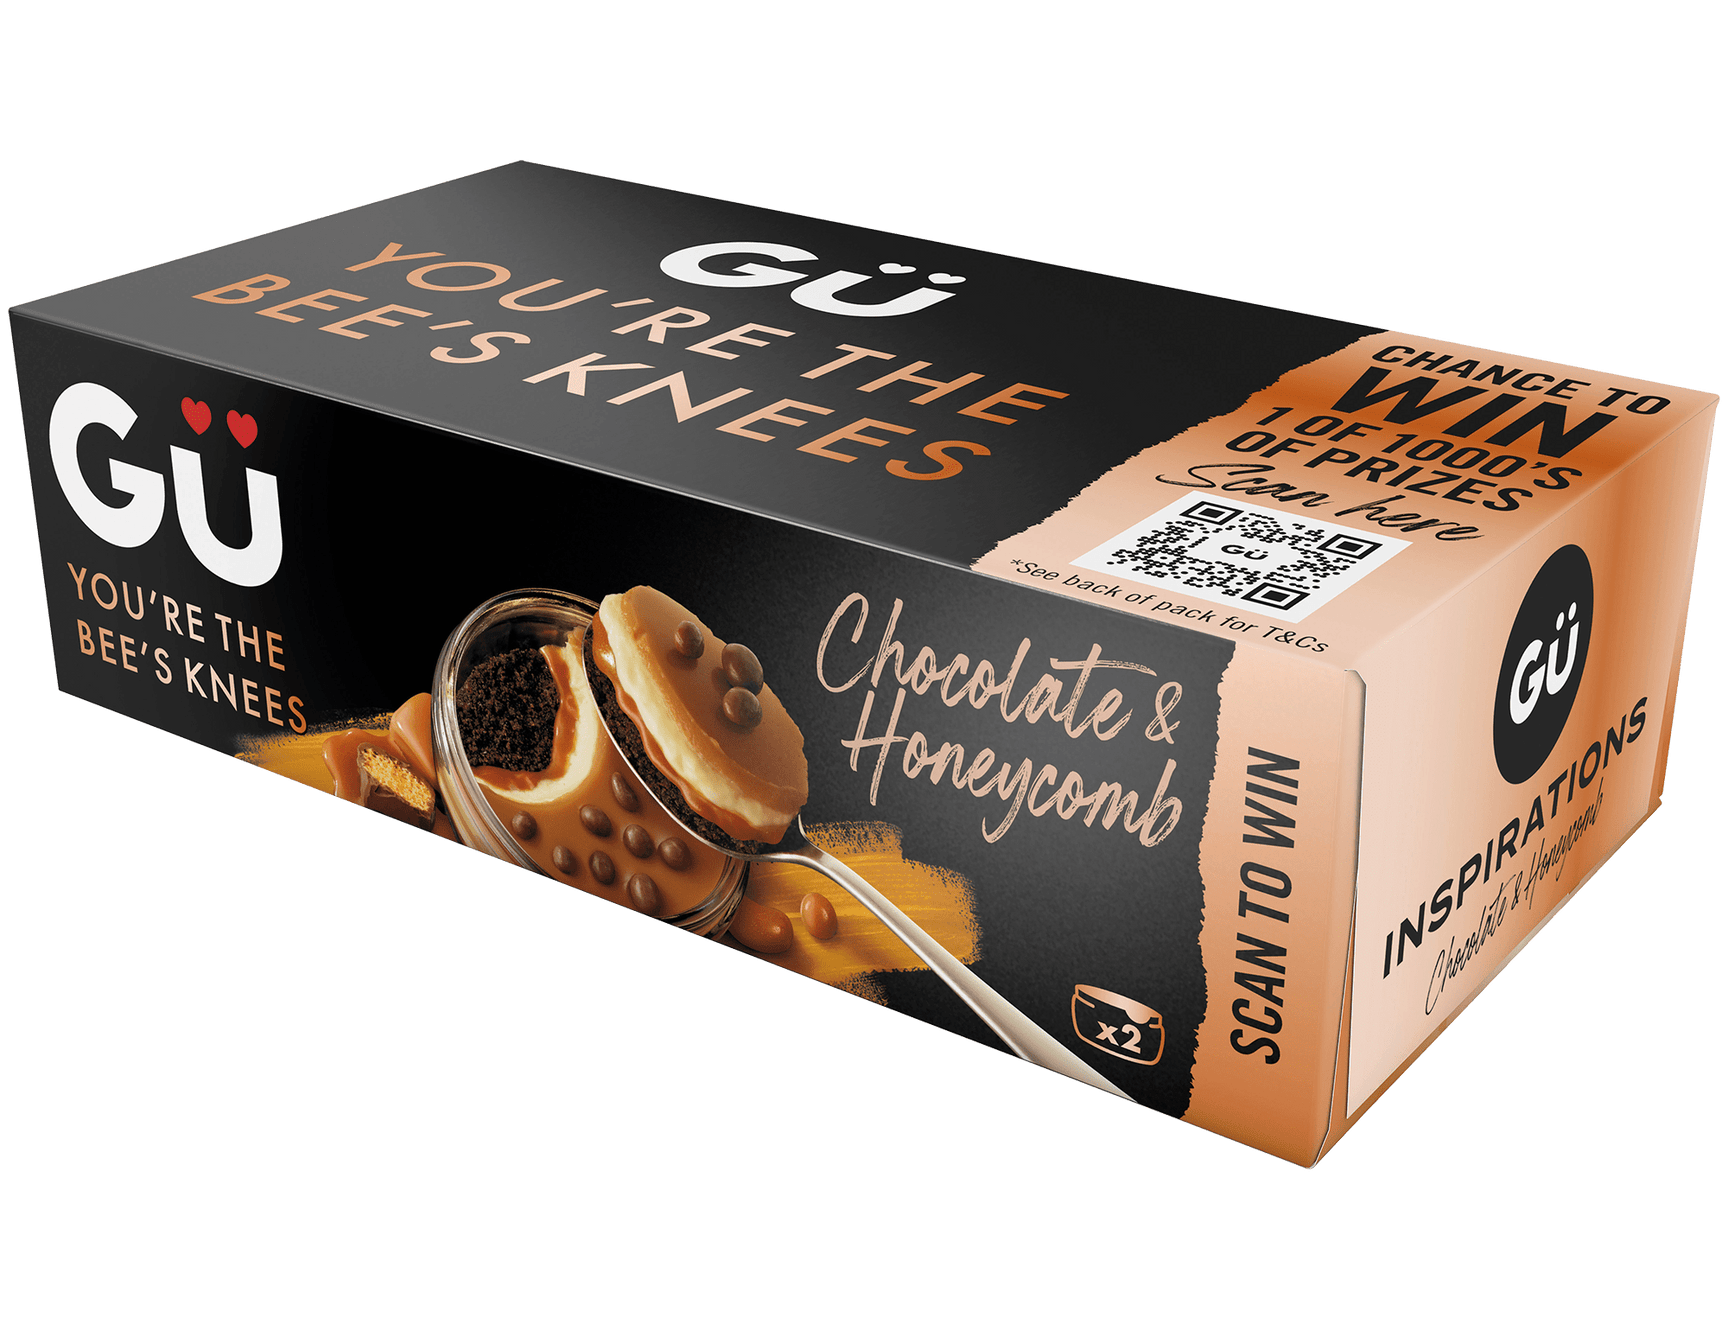 pack gu inspirations chocolate & honeycomb treats